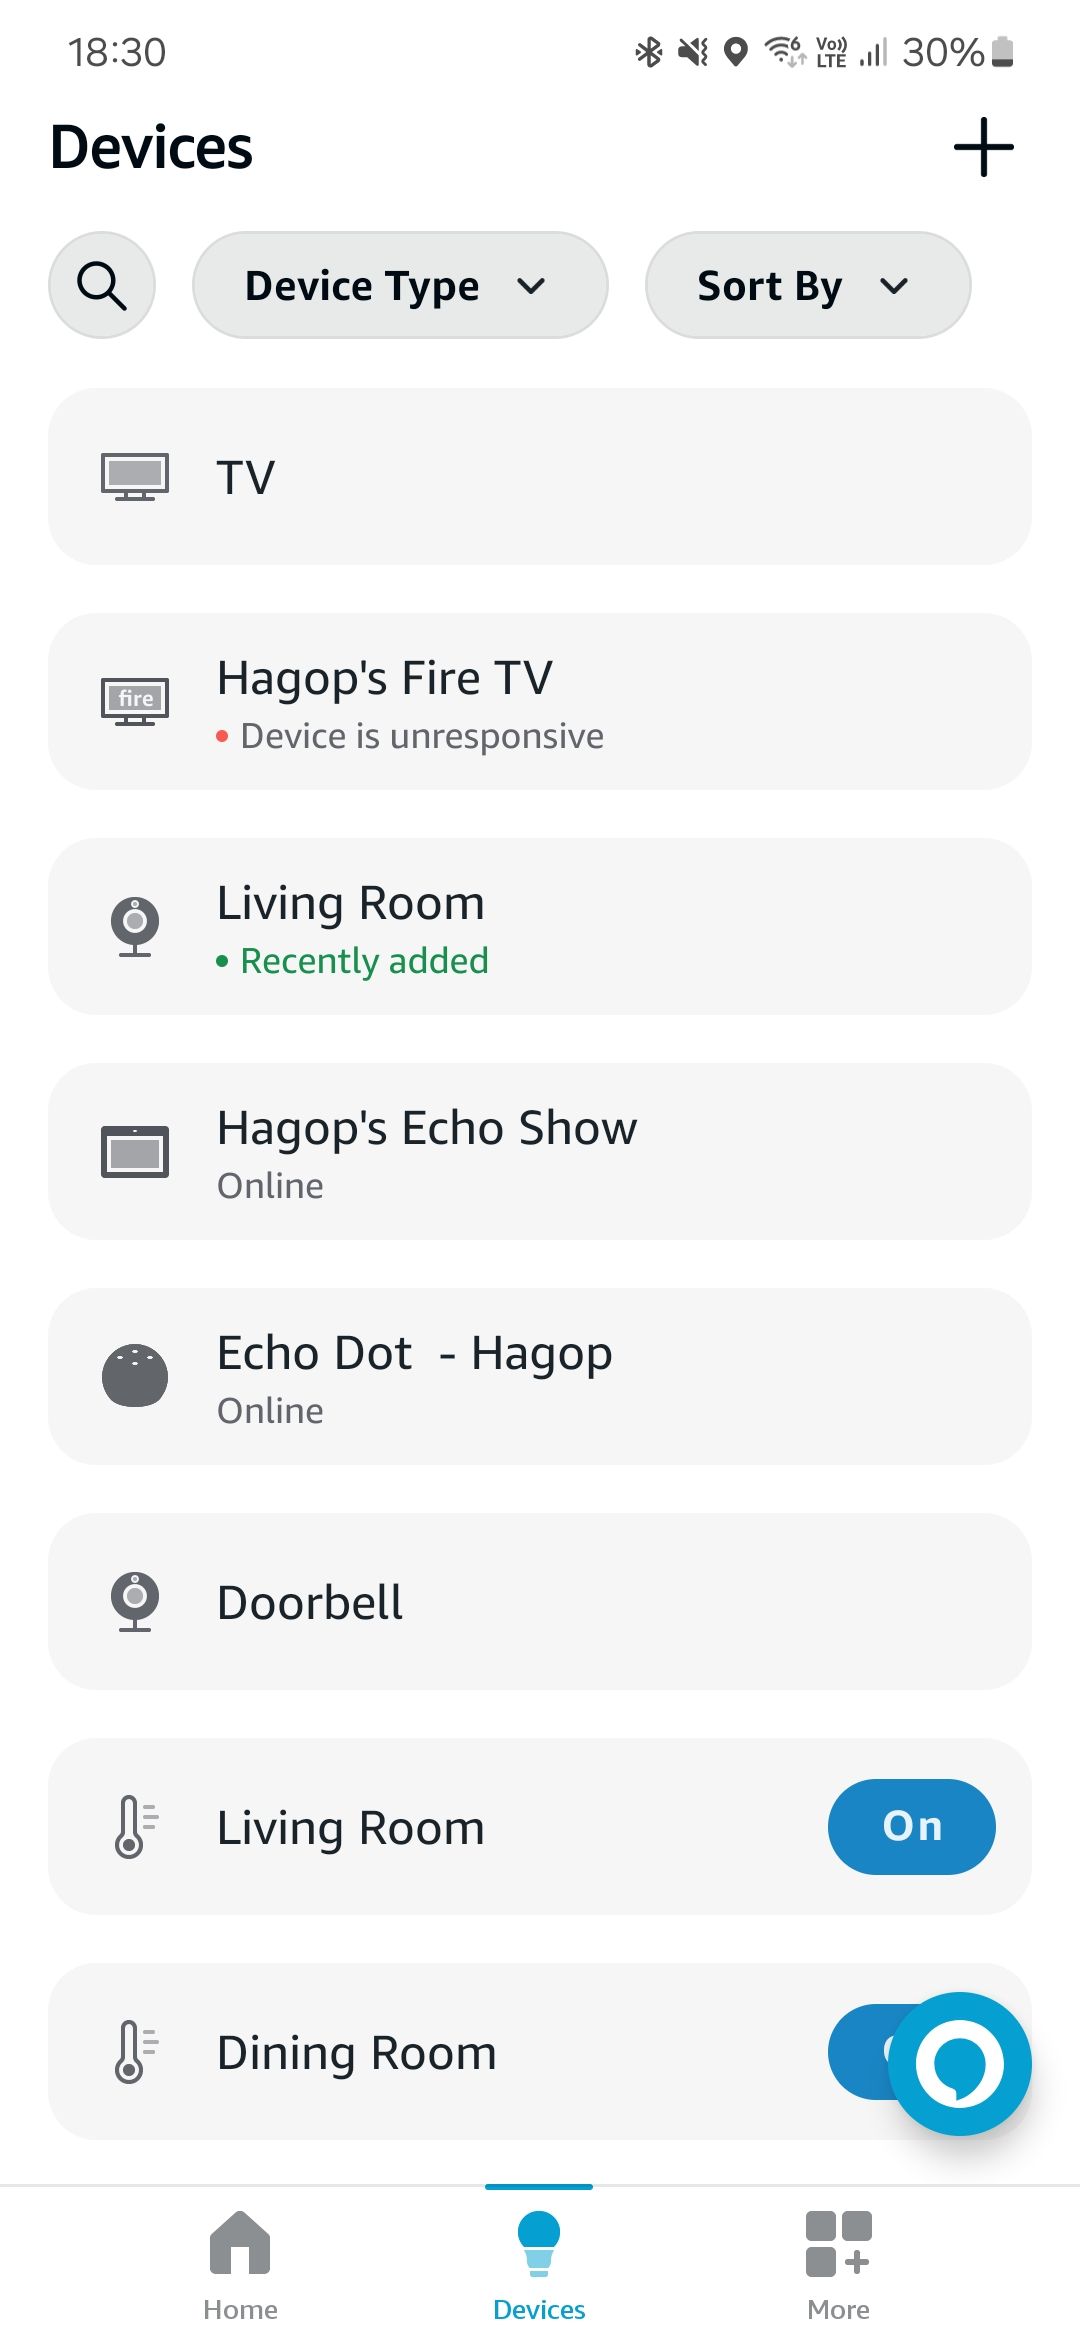 Captura de tela do aplicativo Alexa mostrando a lista de dispositivos